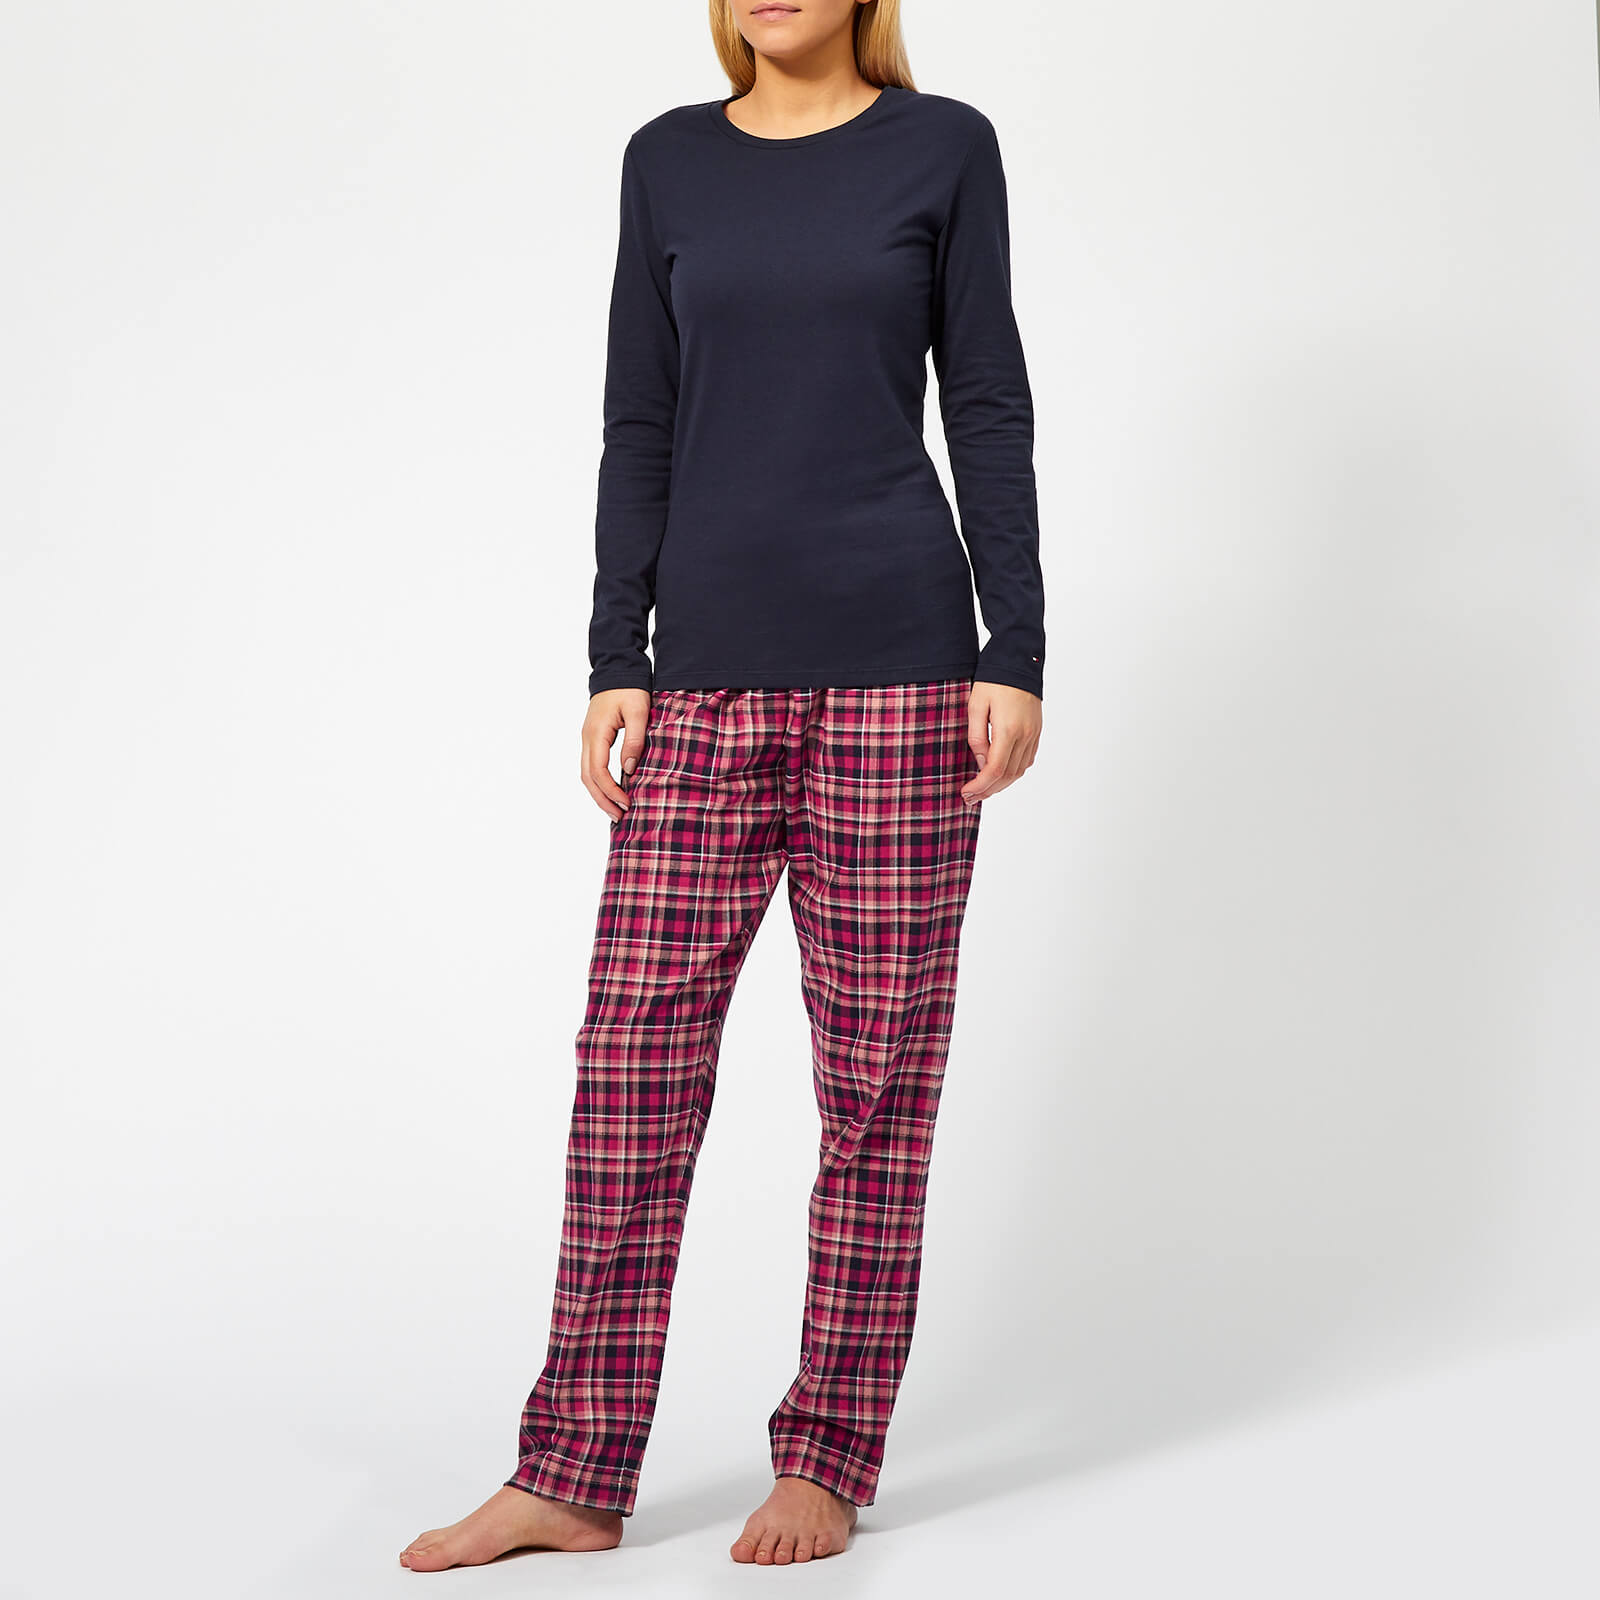 tommy hilfiger pyjamas womens Cheaper 